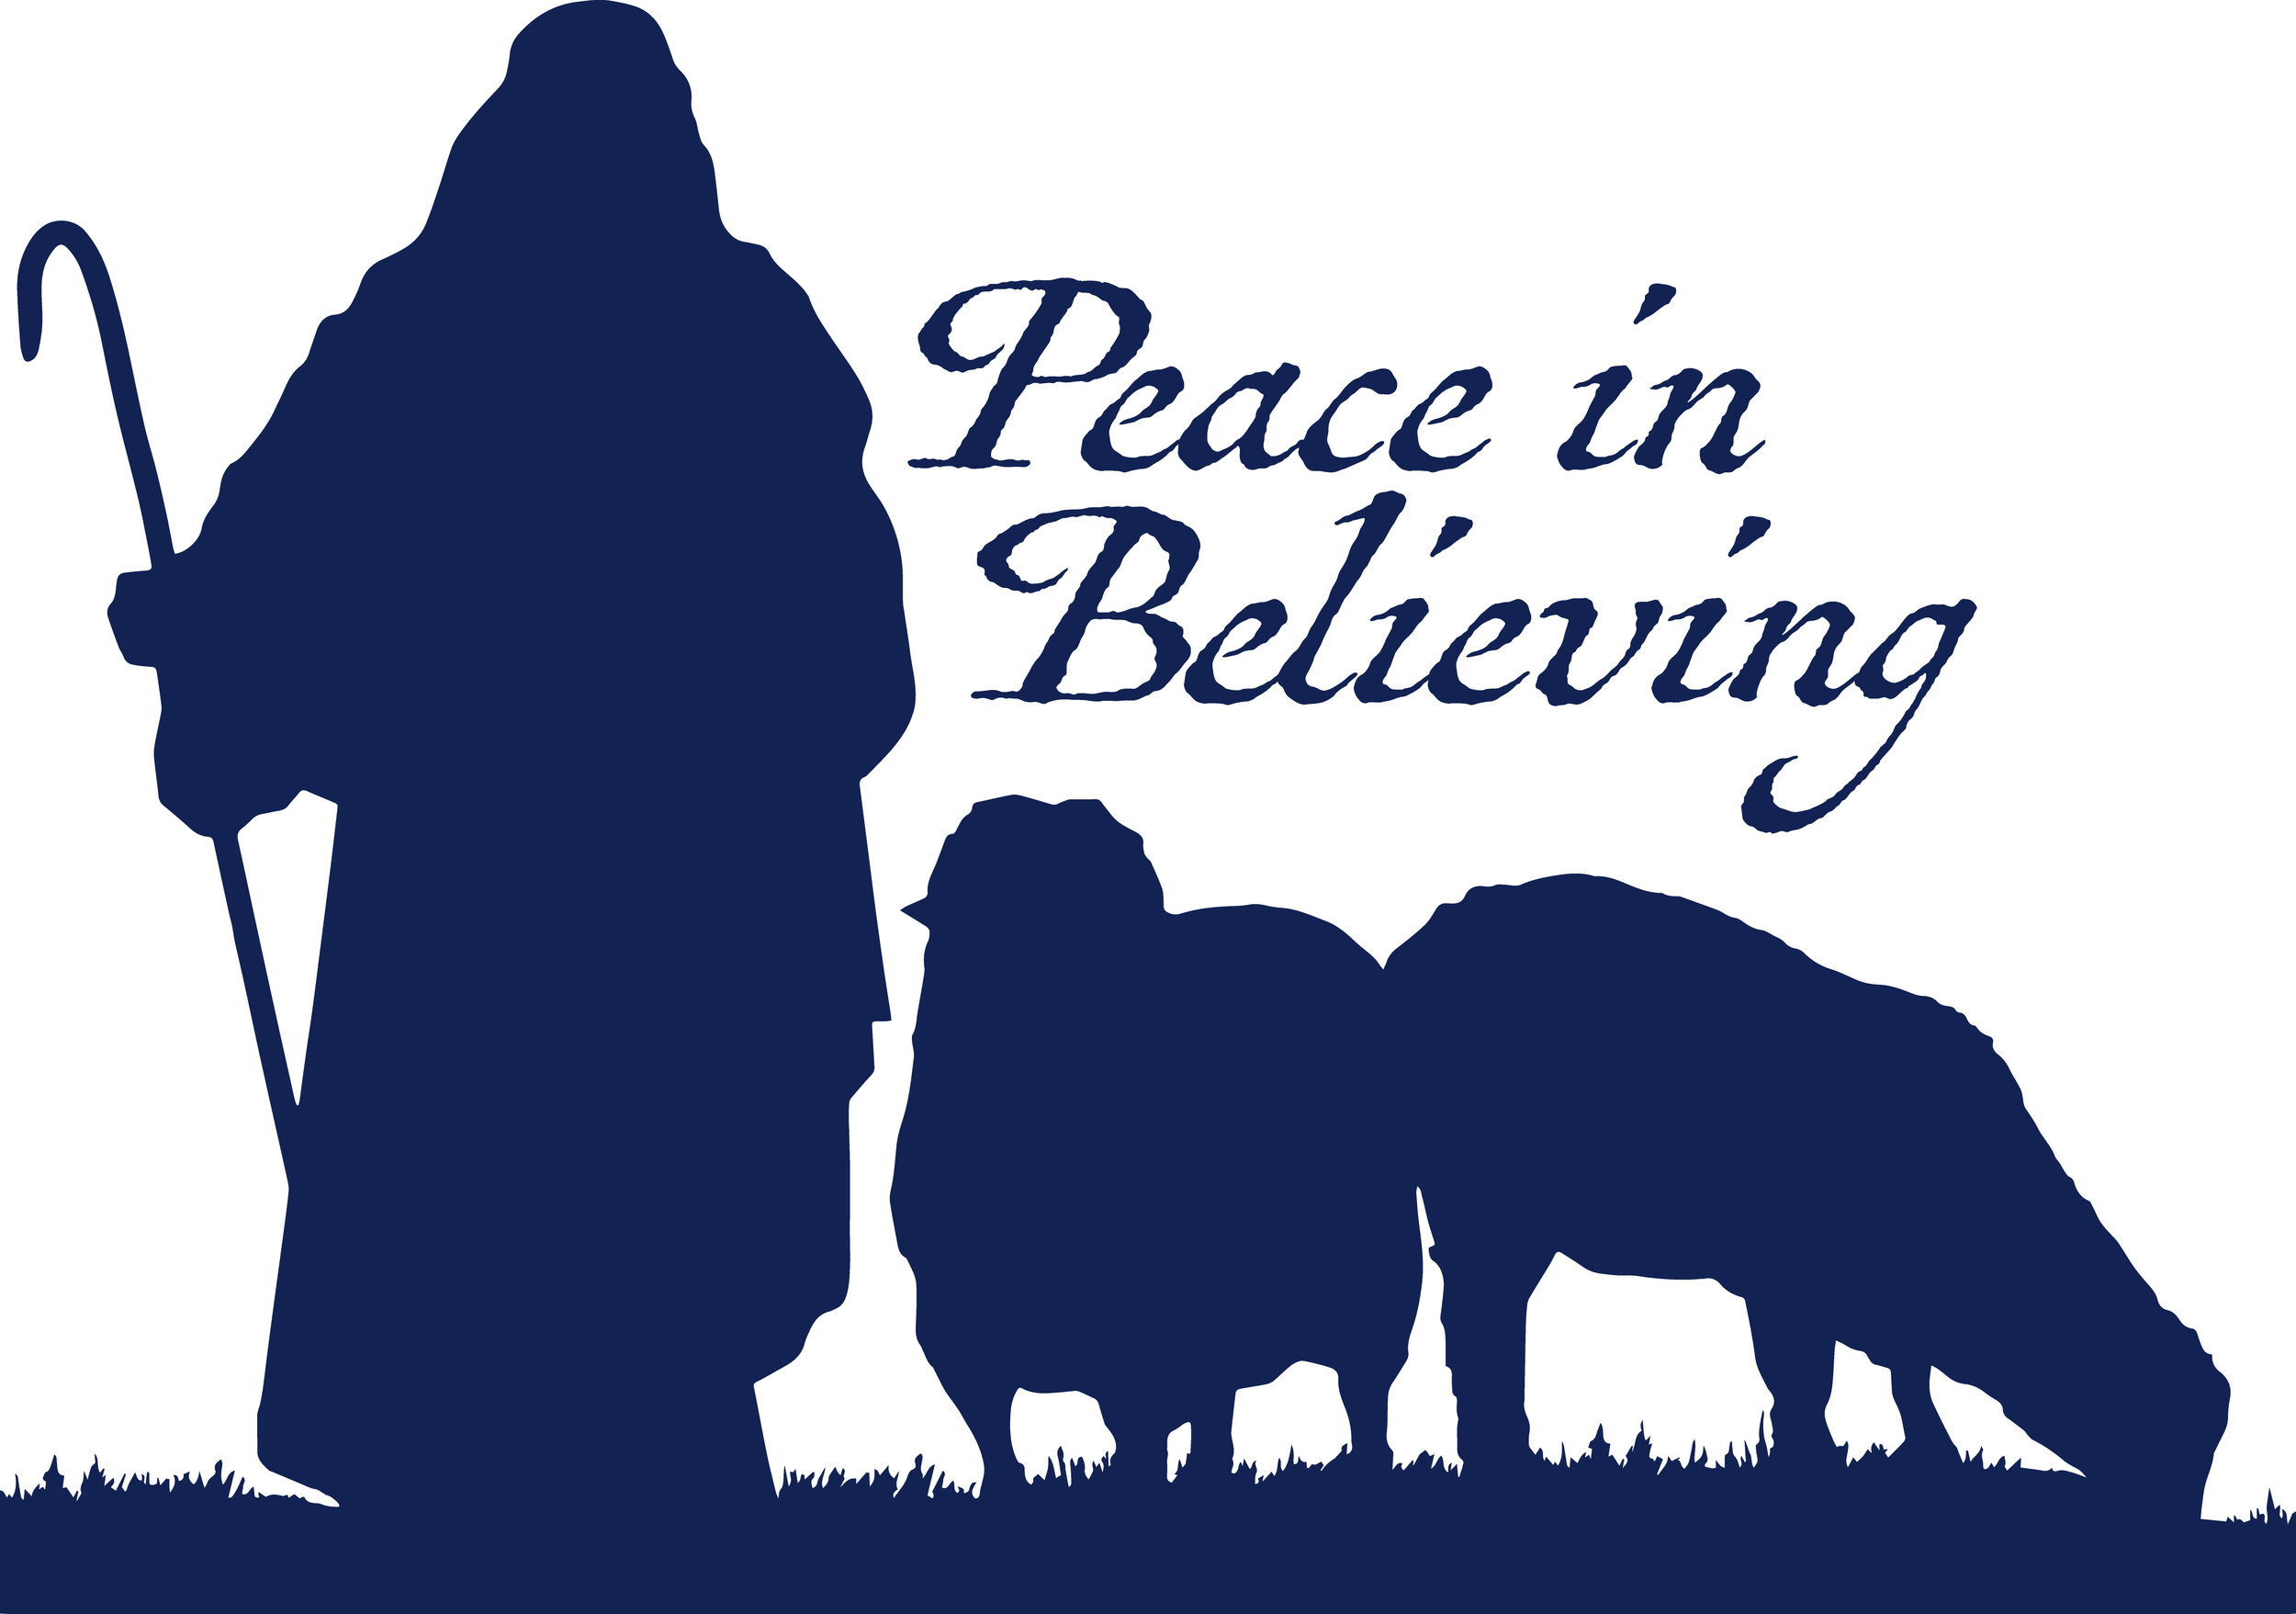 Peace in Believing_v6.jpg